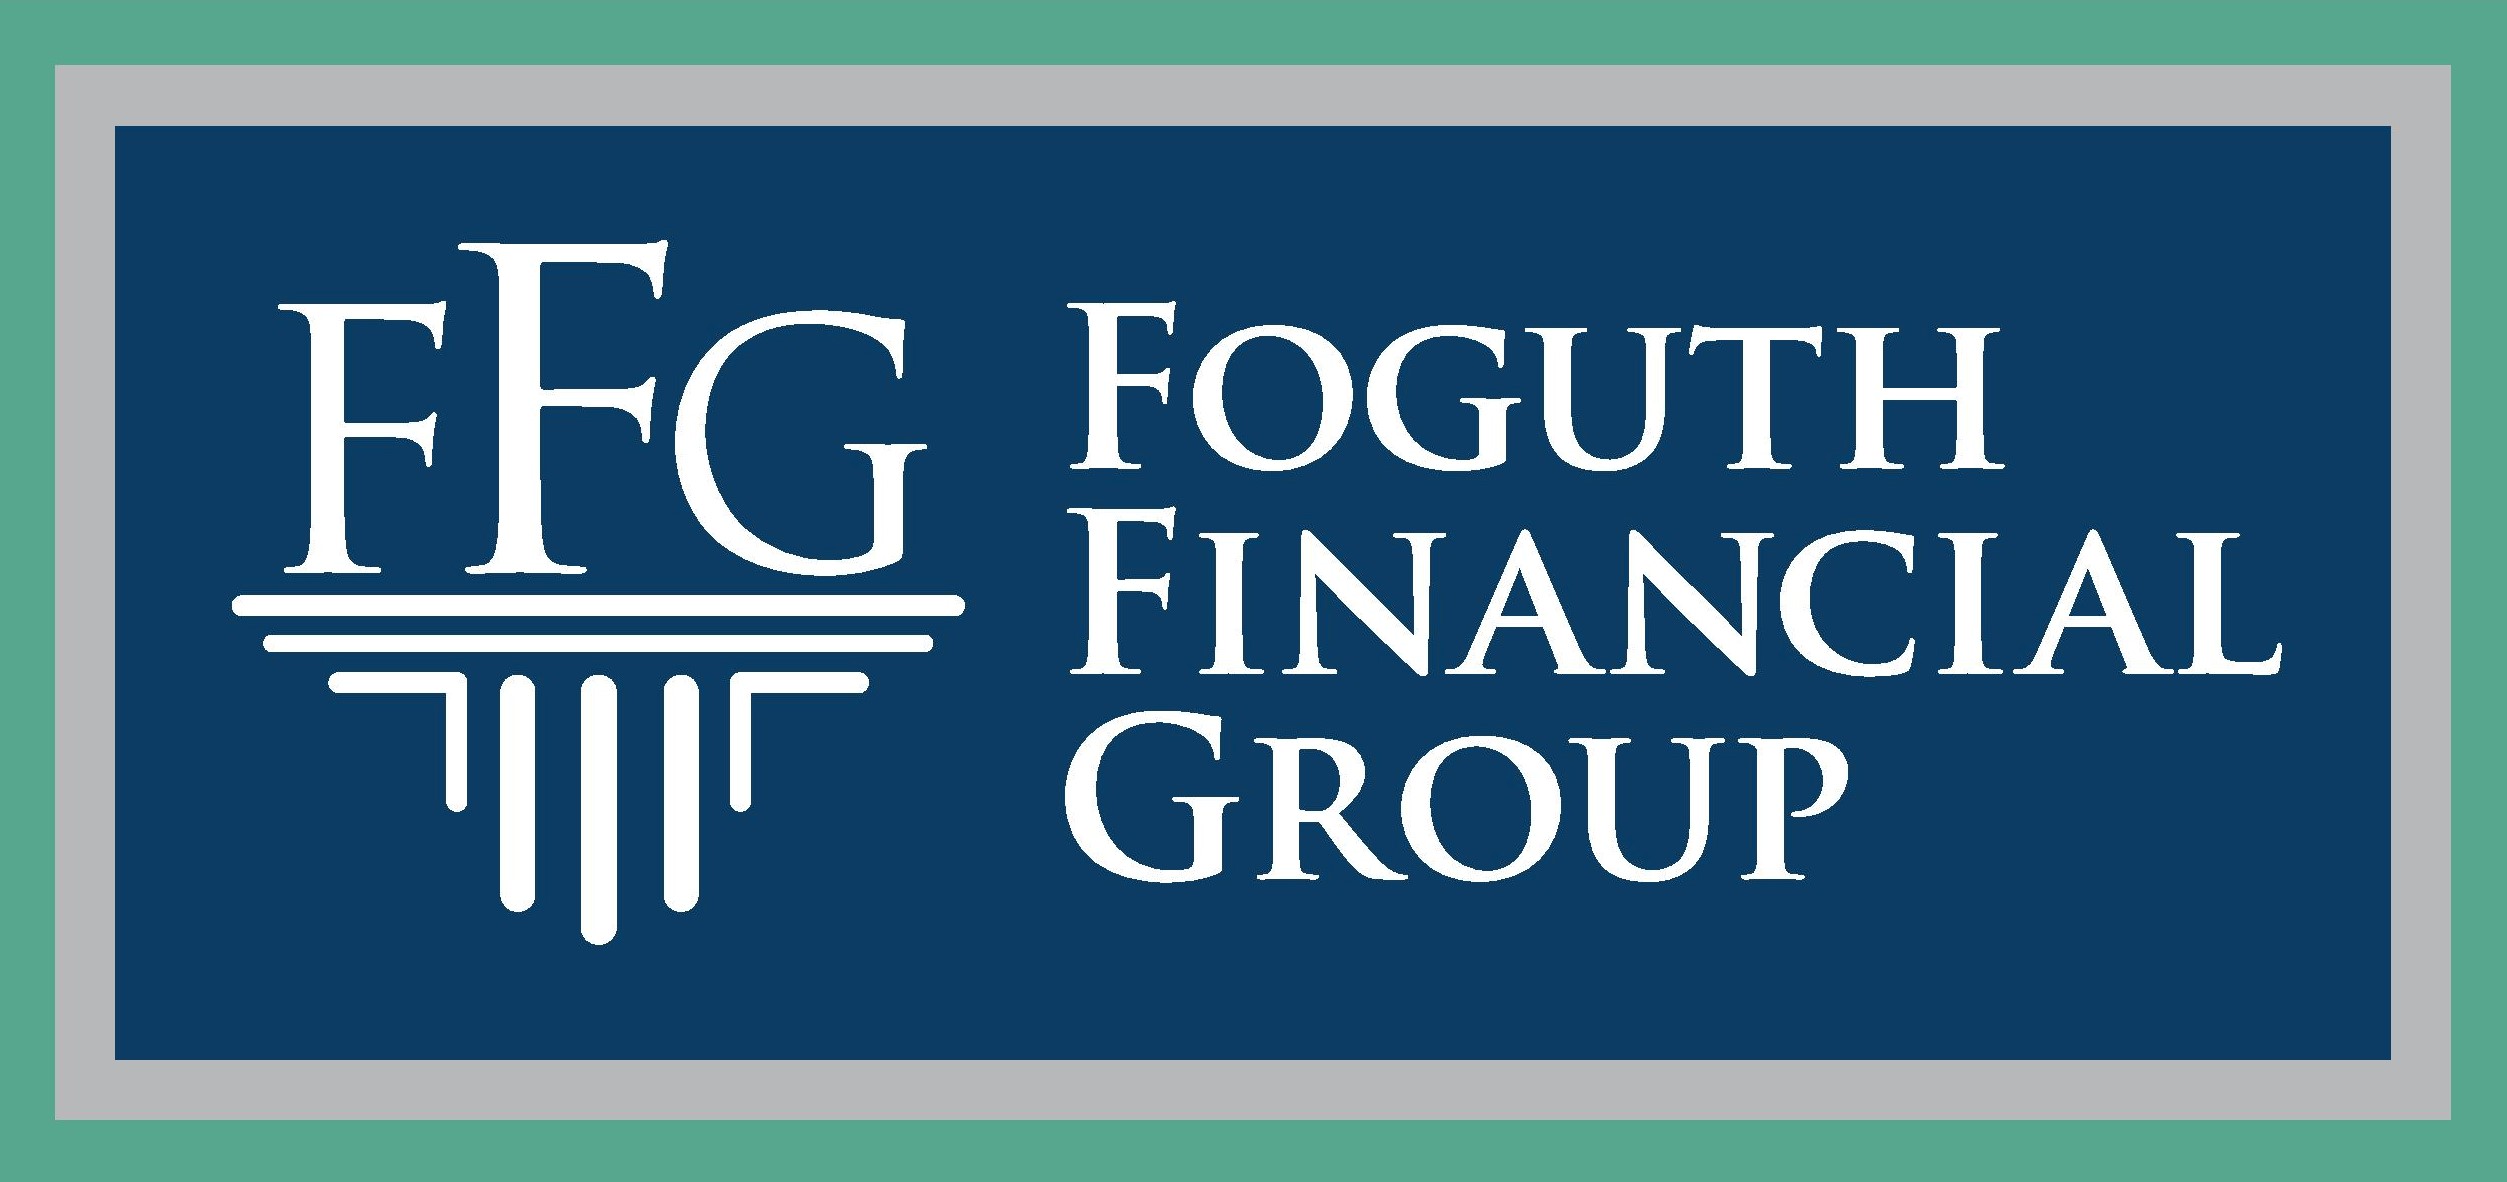 C4 Foguth Financial Group (Nivel 4)